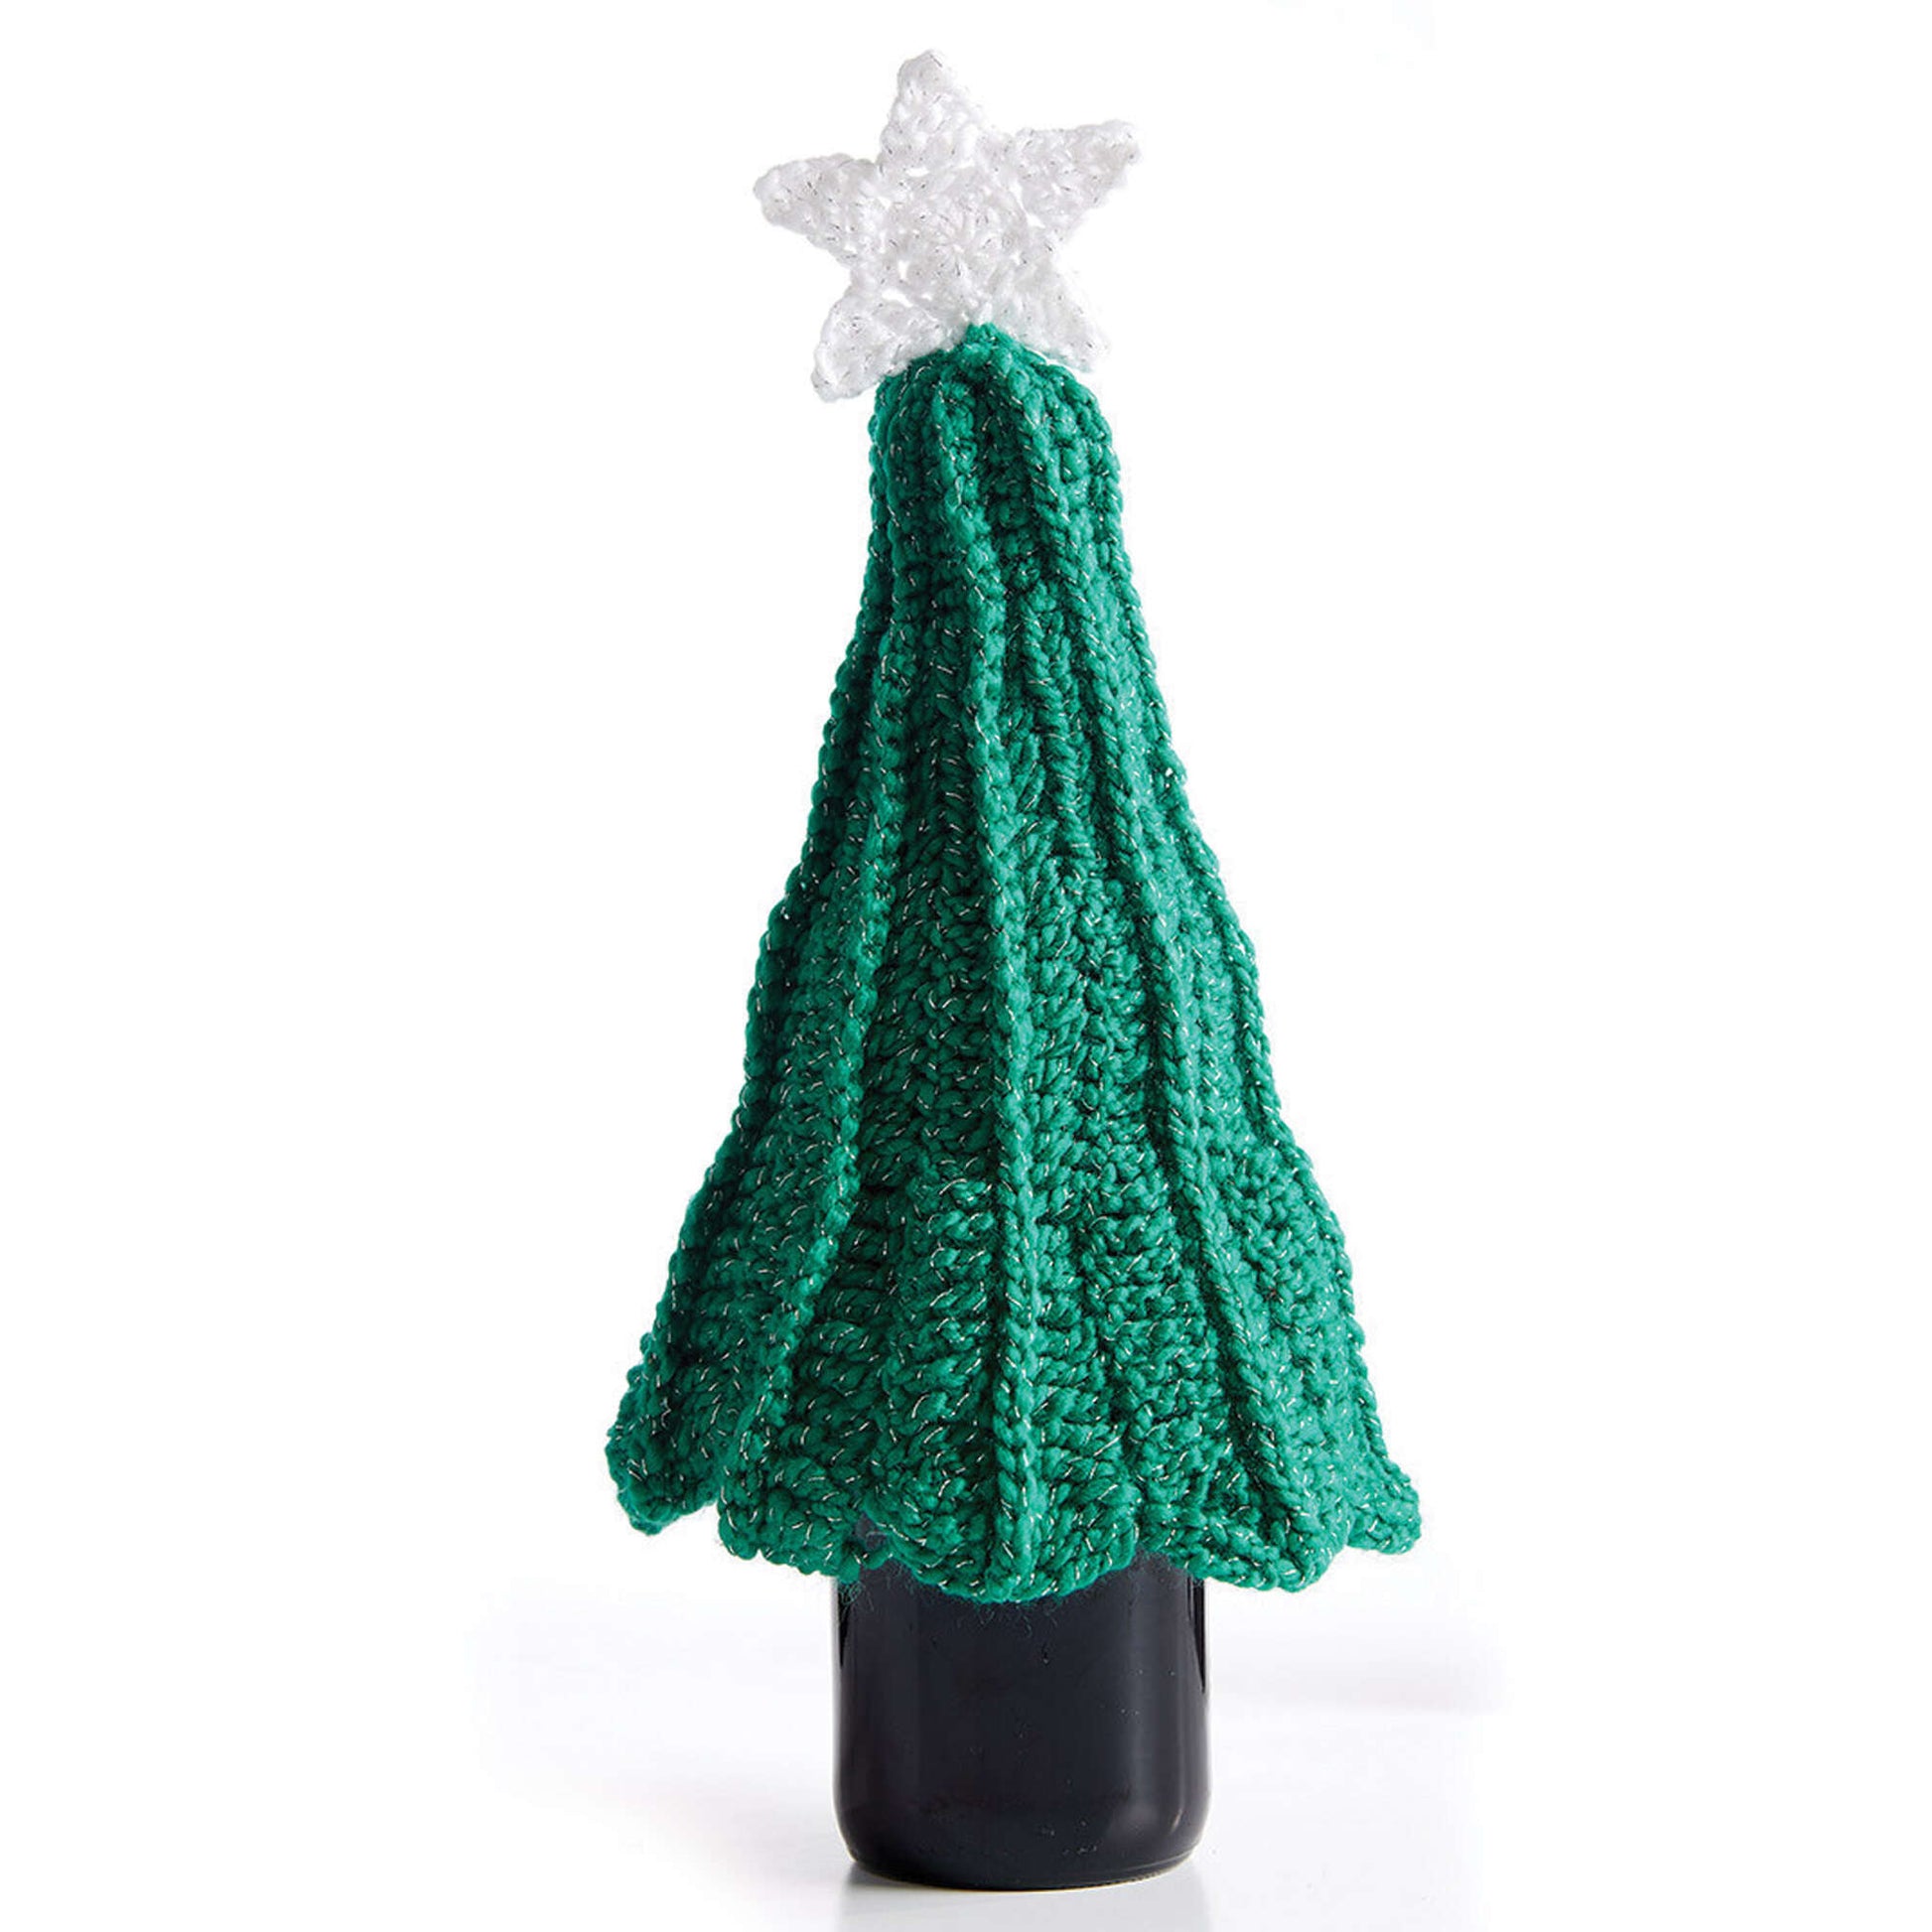 Bernat Crochet Christmas Tree Bottle Topper Crochet Holiday made in Bernat Happy Holidays yarn